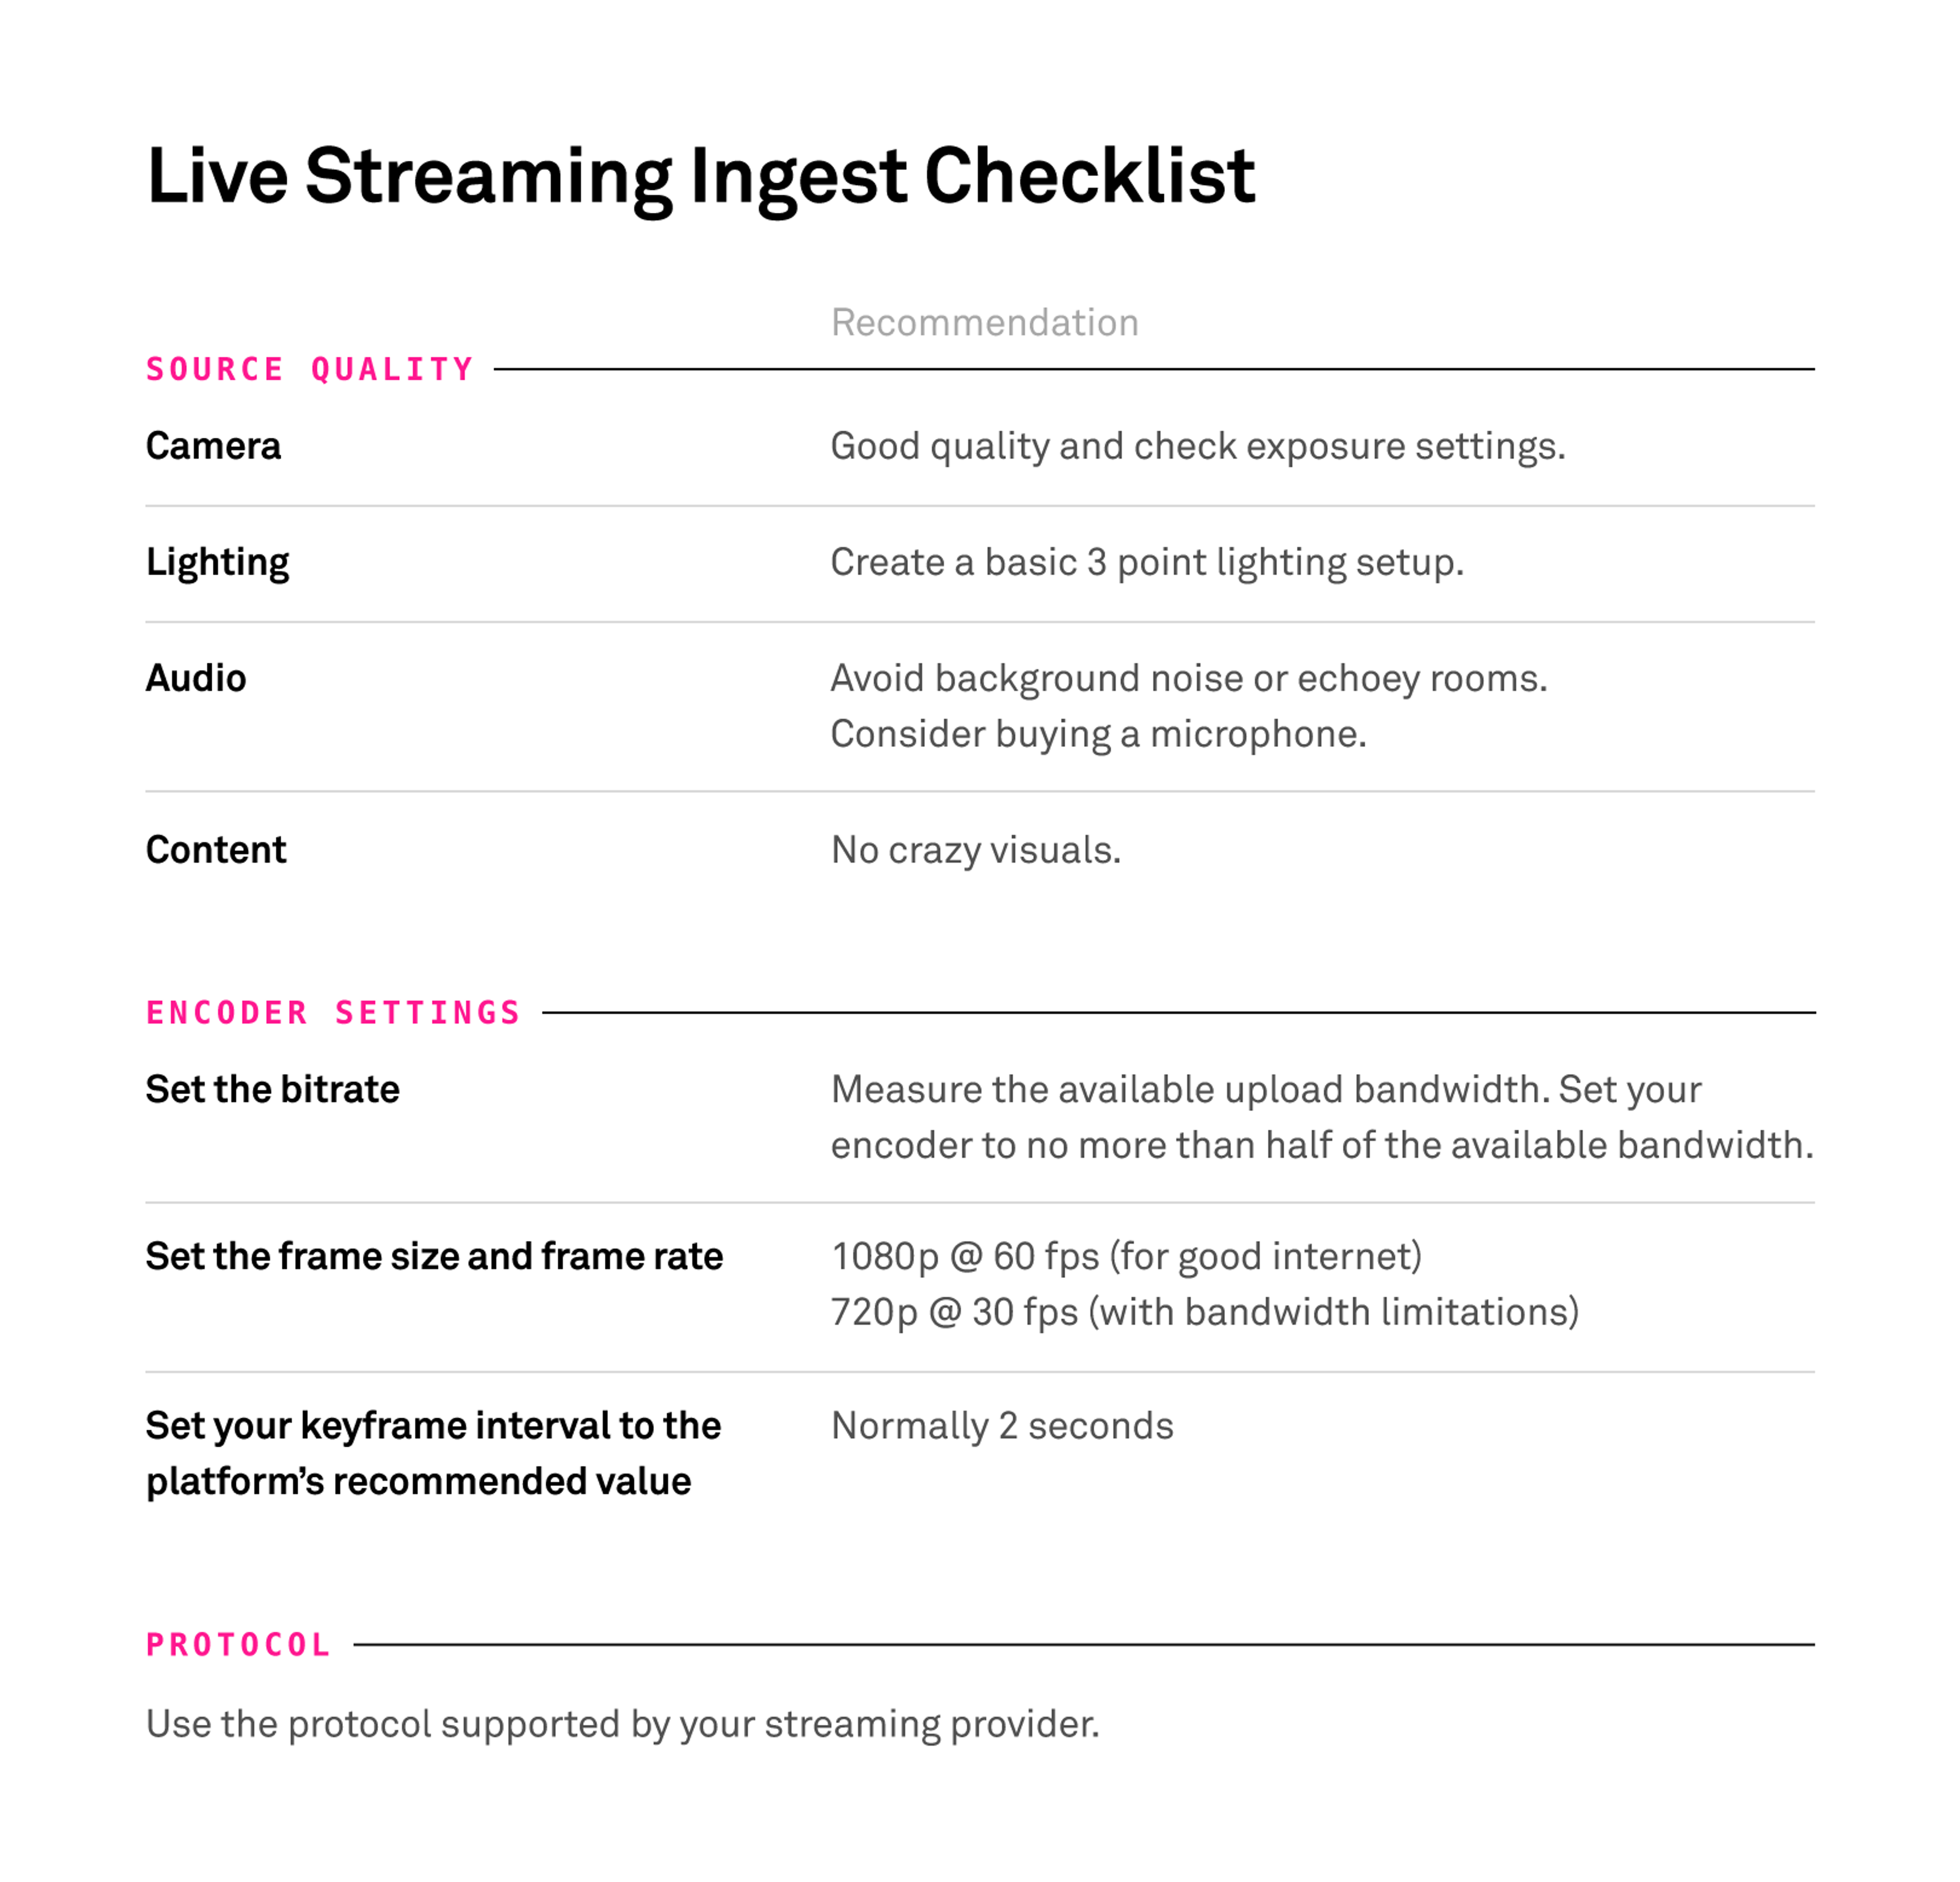 Live Streaming Ingest Checklist